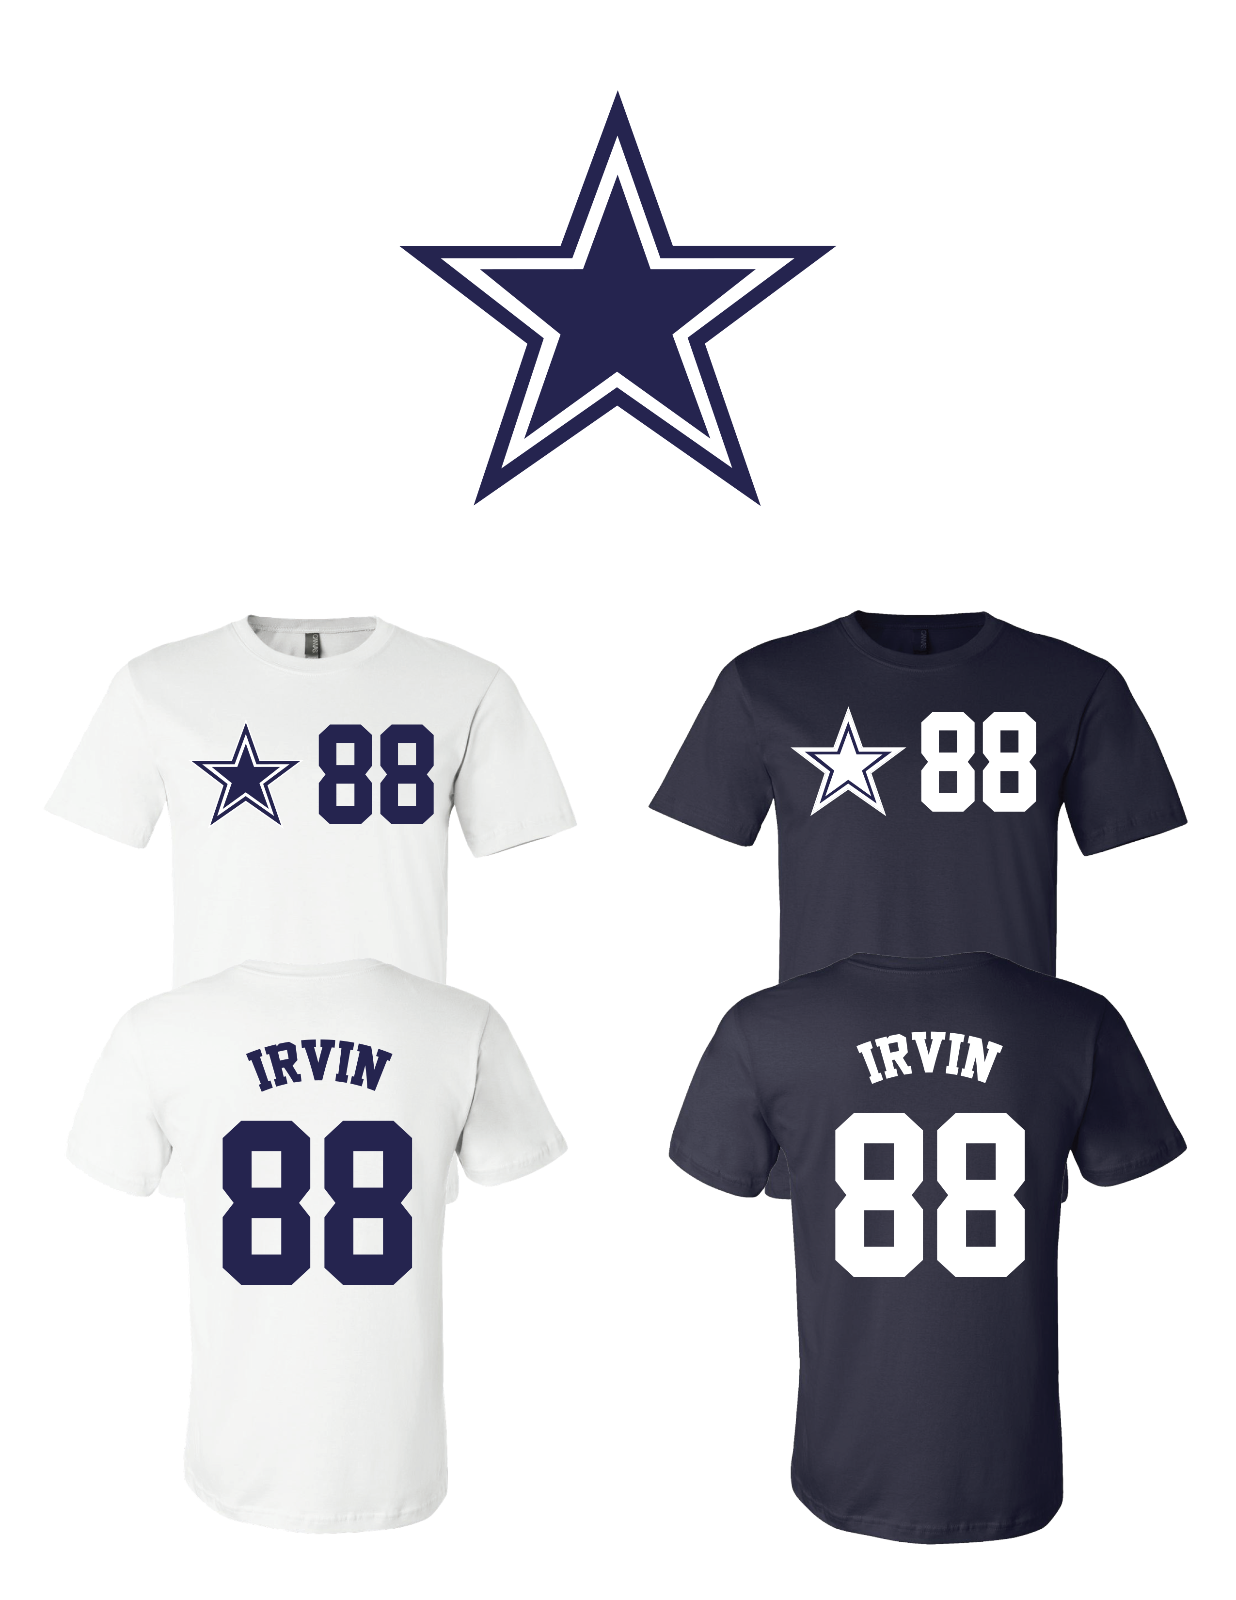 Michael Irvin #88 Dallas Cowboys Jersey player shirt